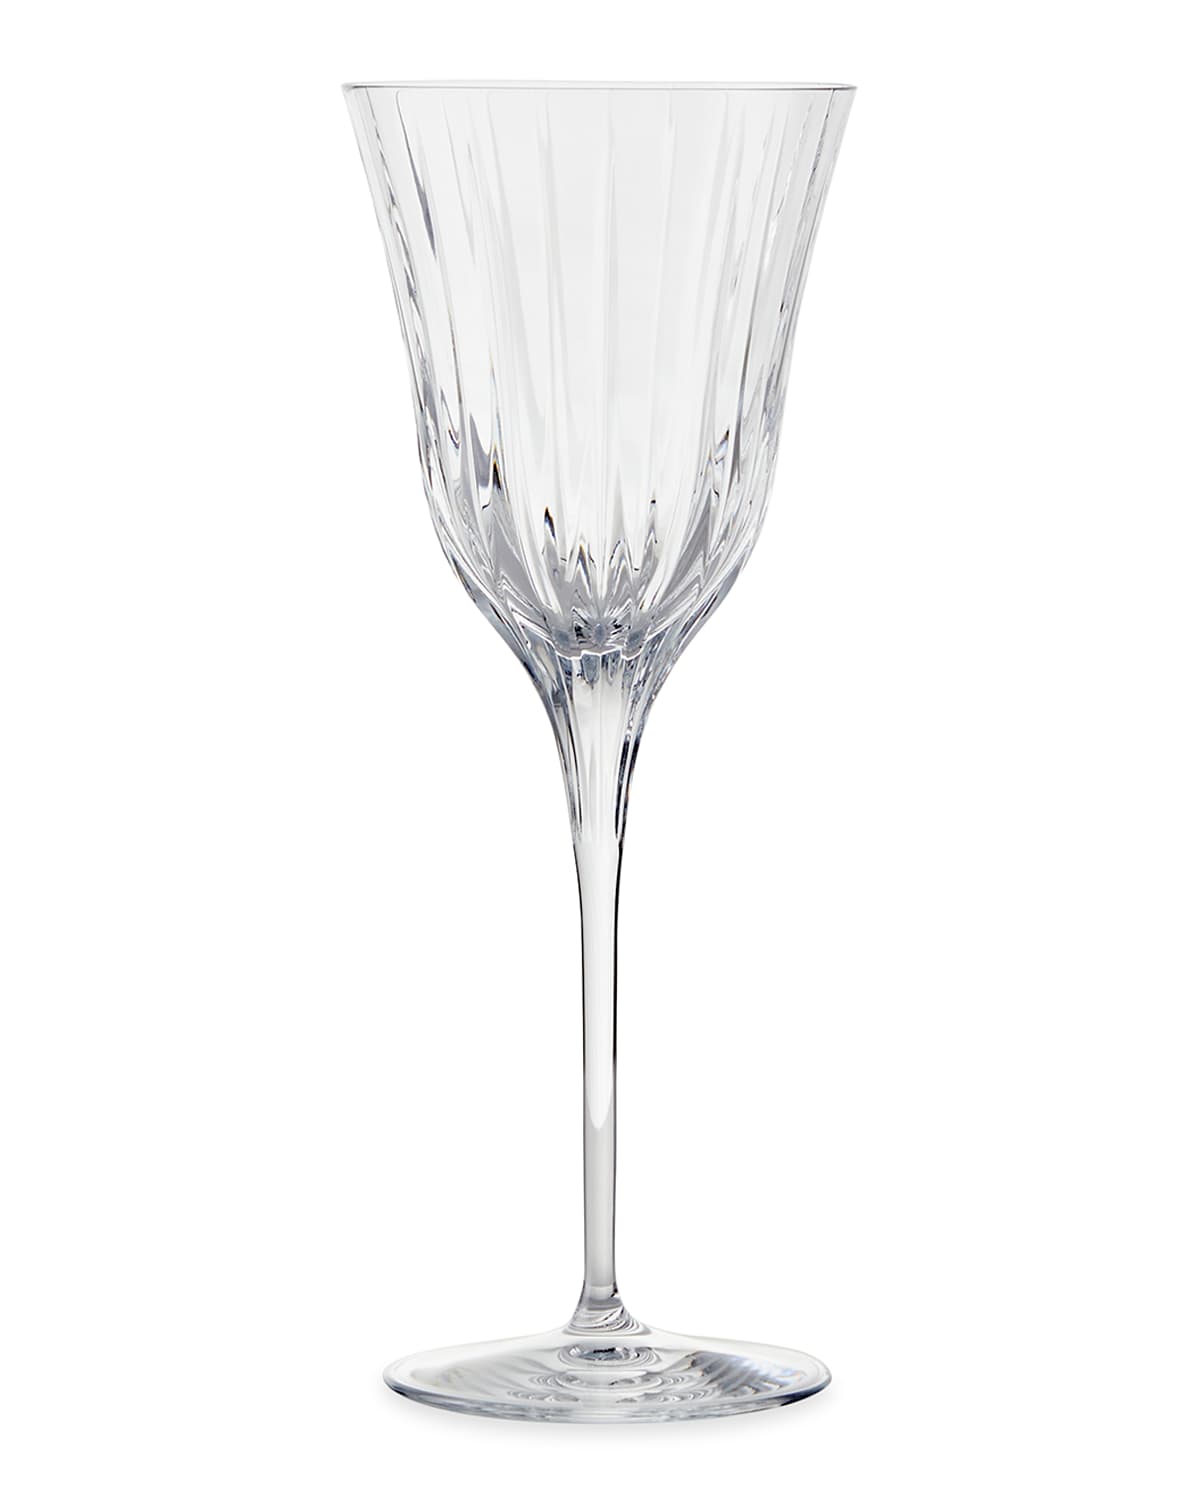 Vietri Contessa Assorted Stemless Wine Glasses - Set of 4